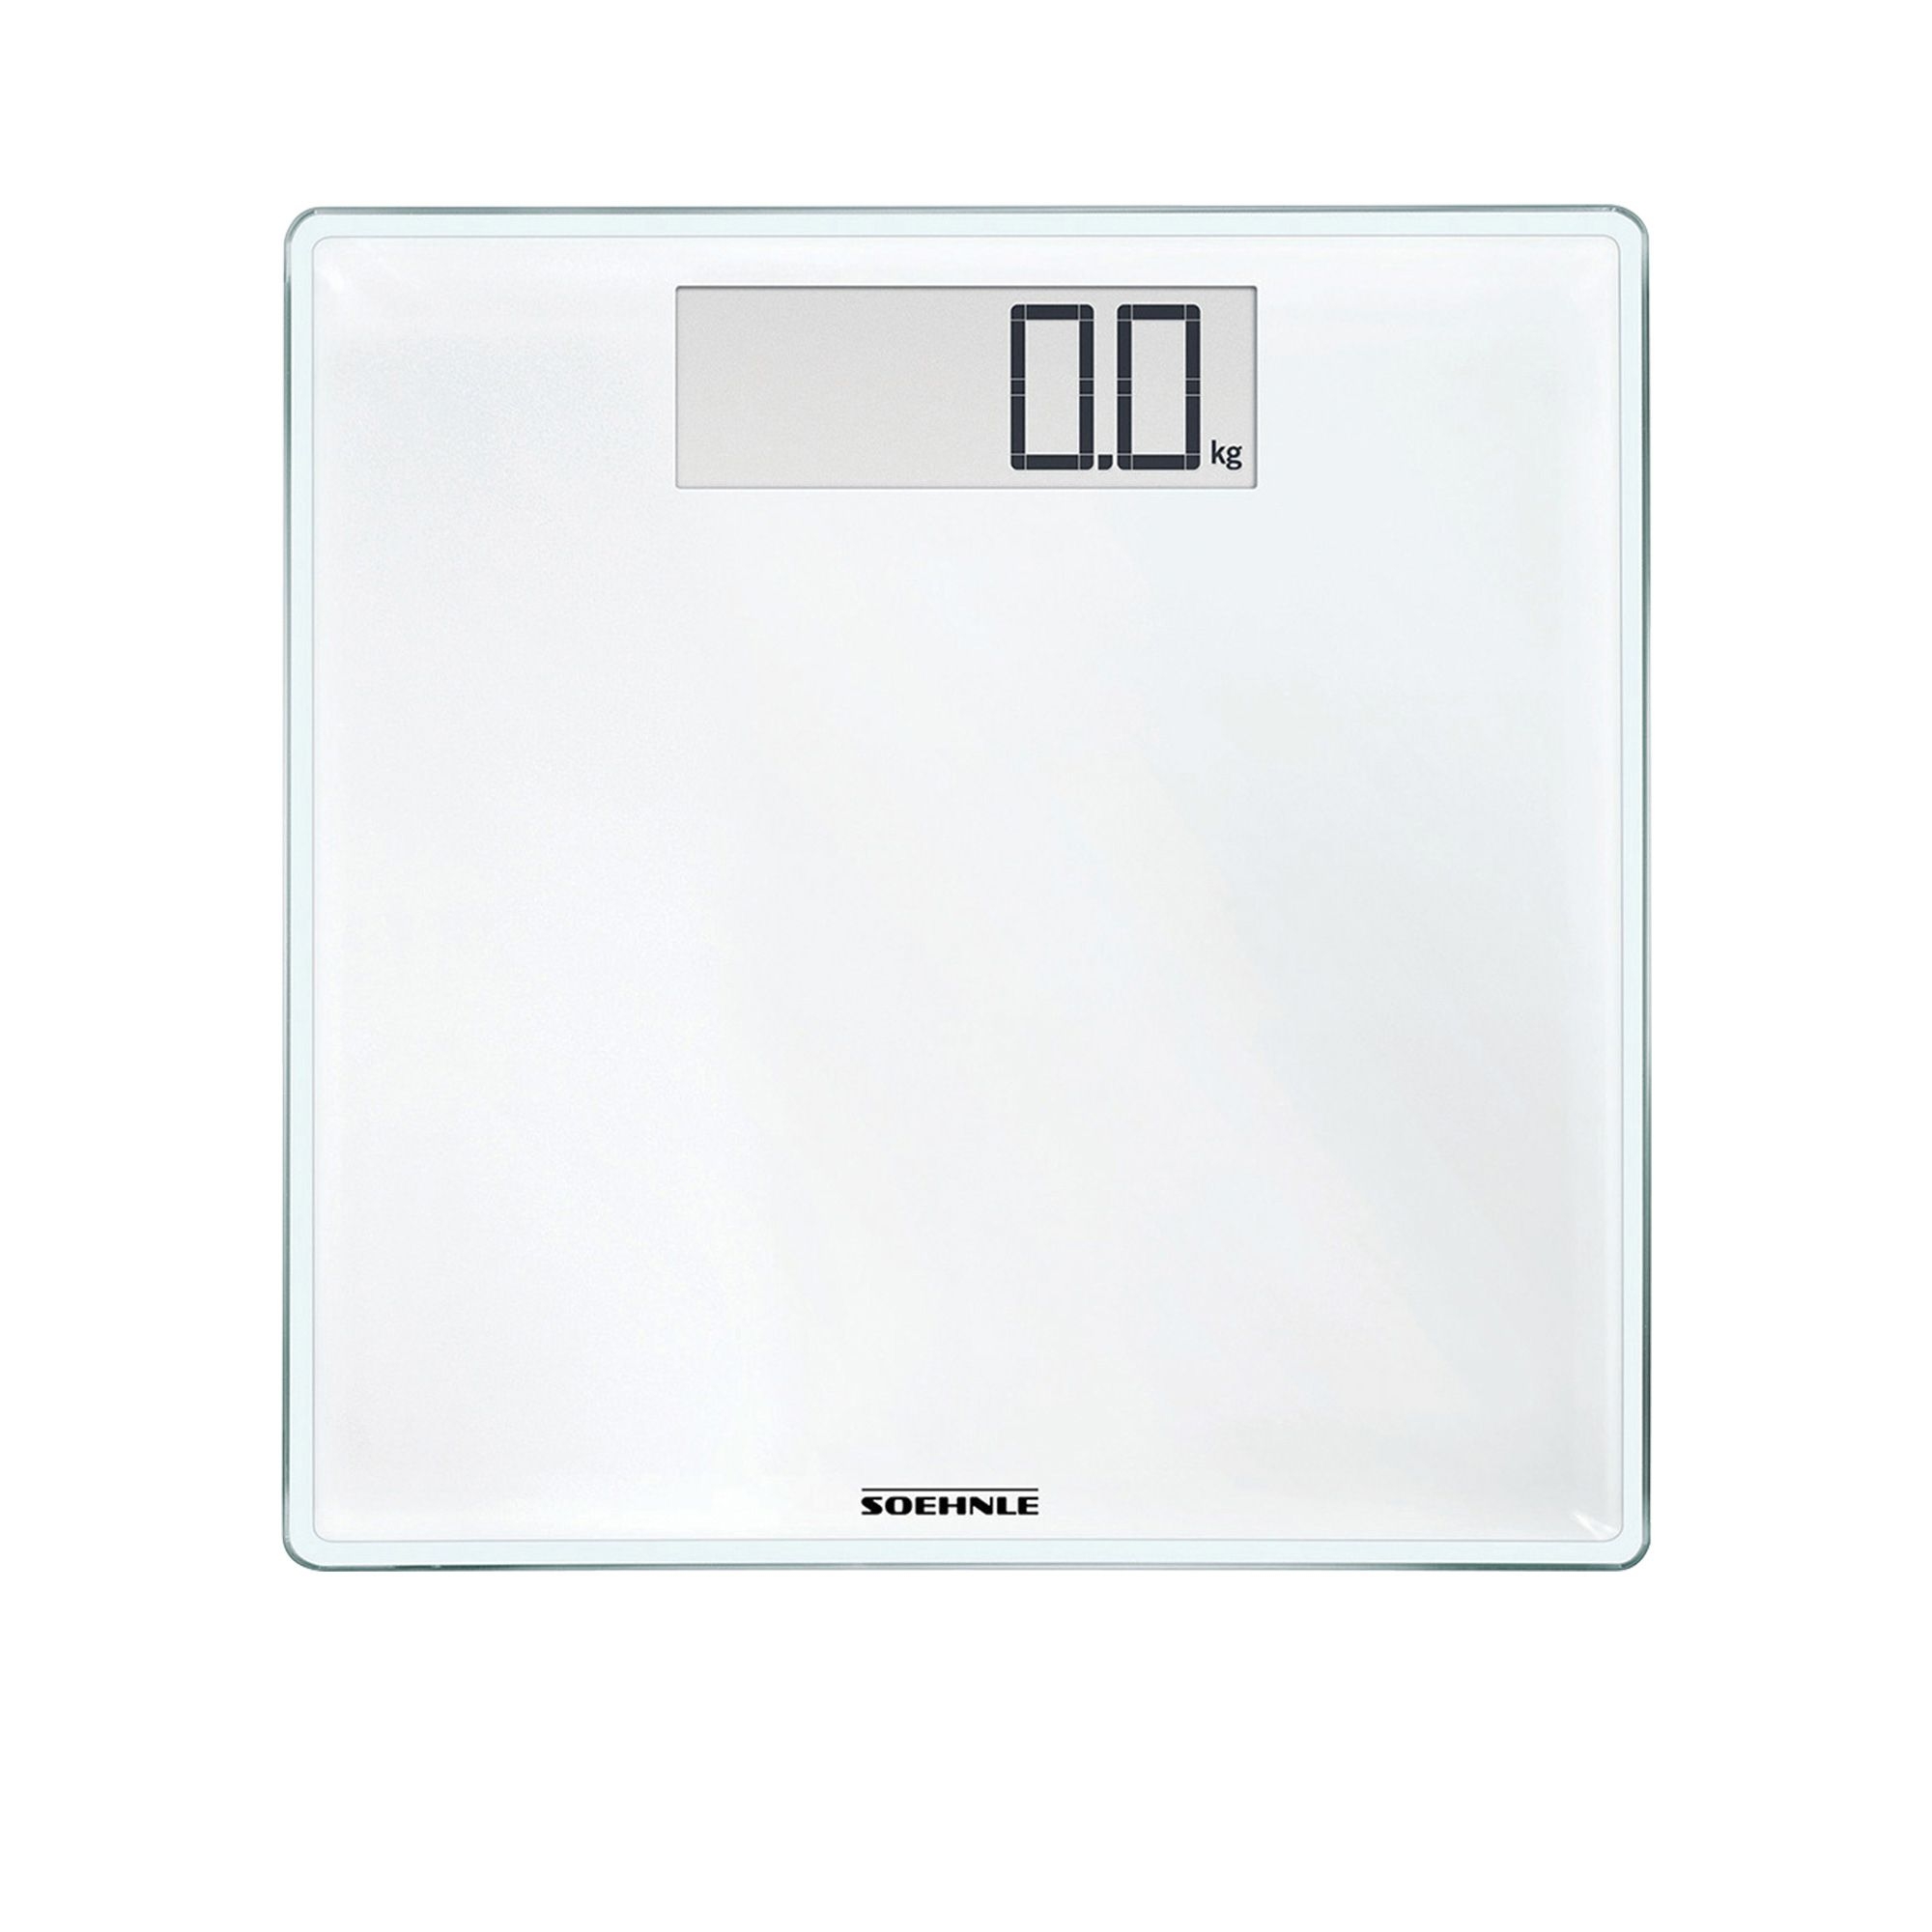 Soehnle Style Sense Comfort 100 Bathroom Scale White Image 1